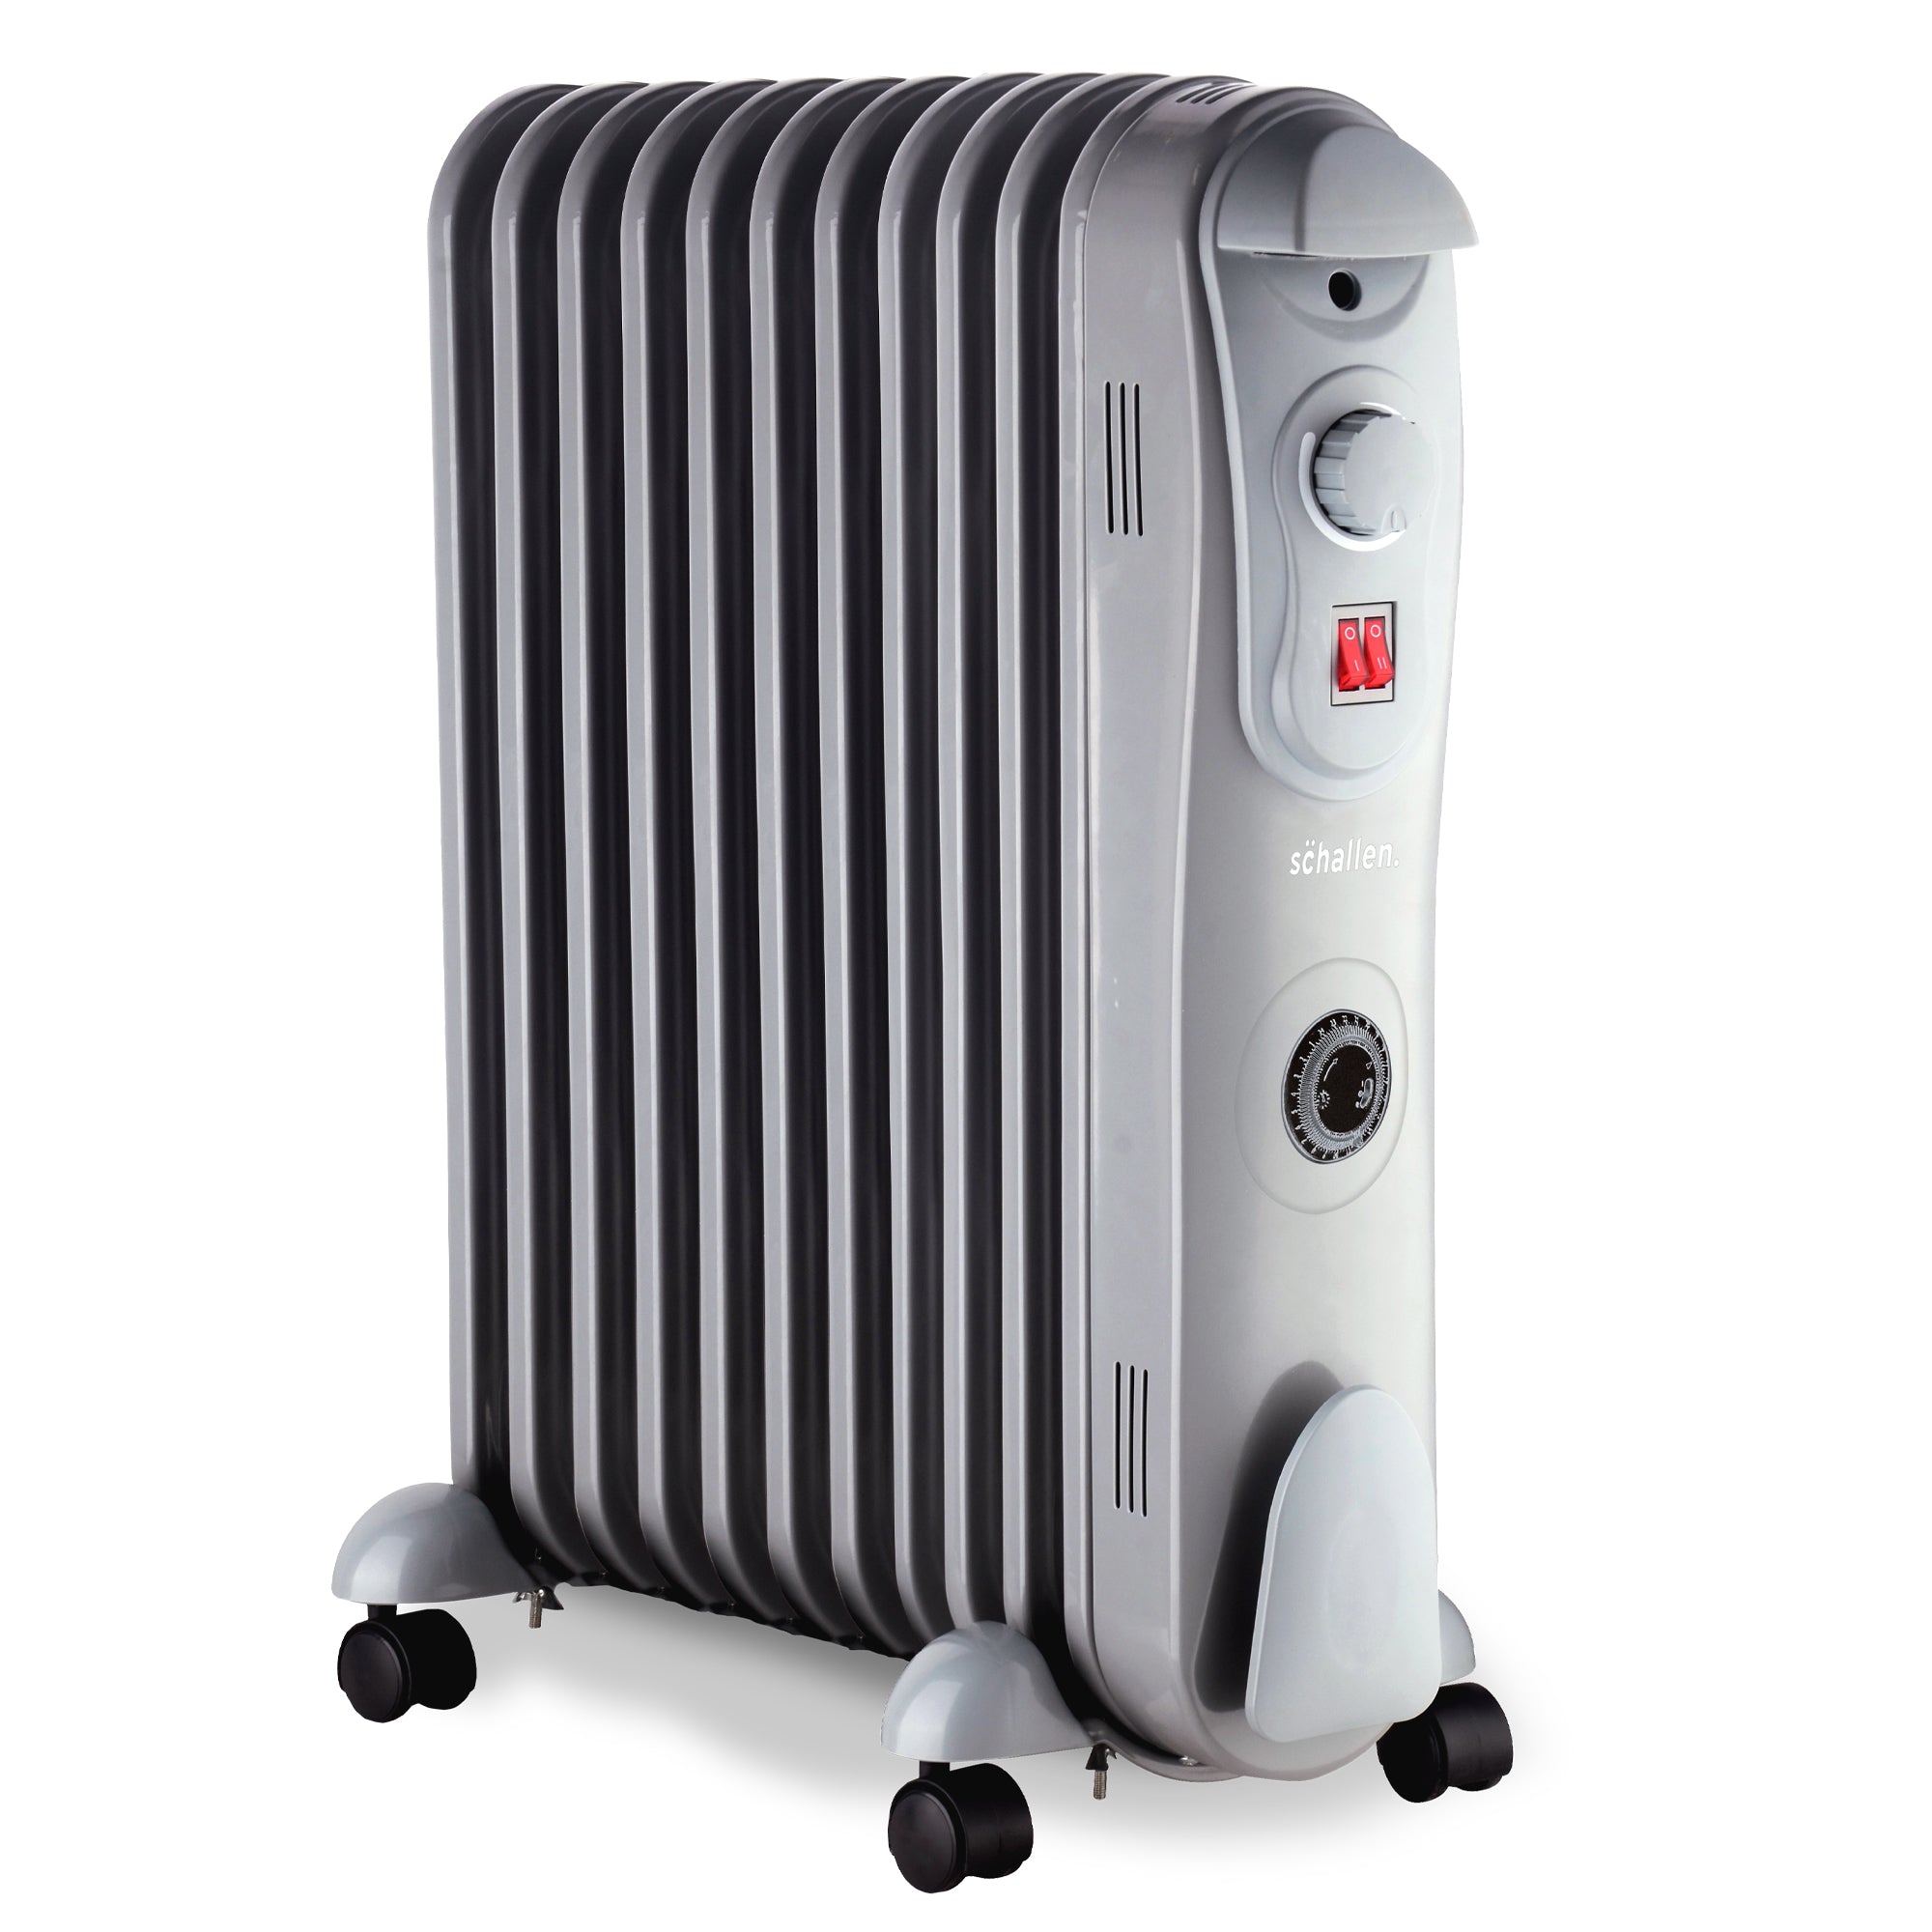 Oil Radiator 2500W Oil Radiator Heater 11 Rib Thermostat Electric Heater  Grey